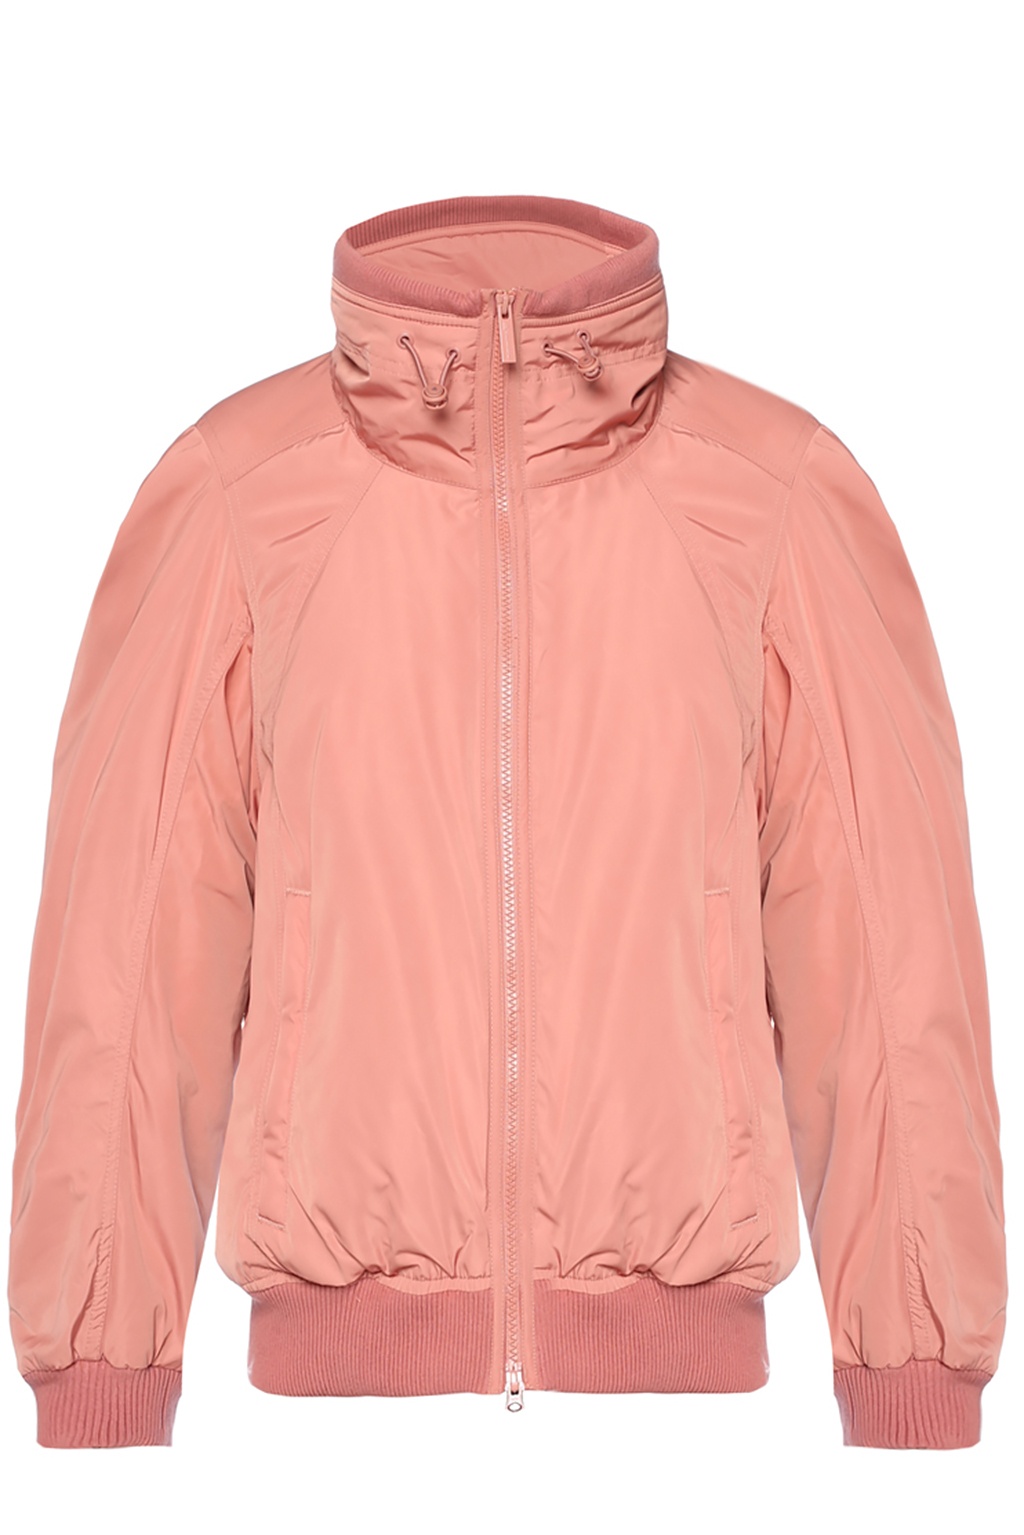 stella mccartney adidas pink jacket